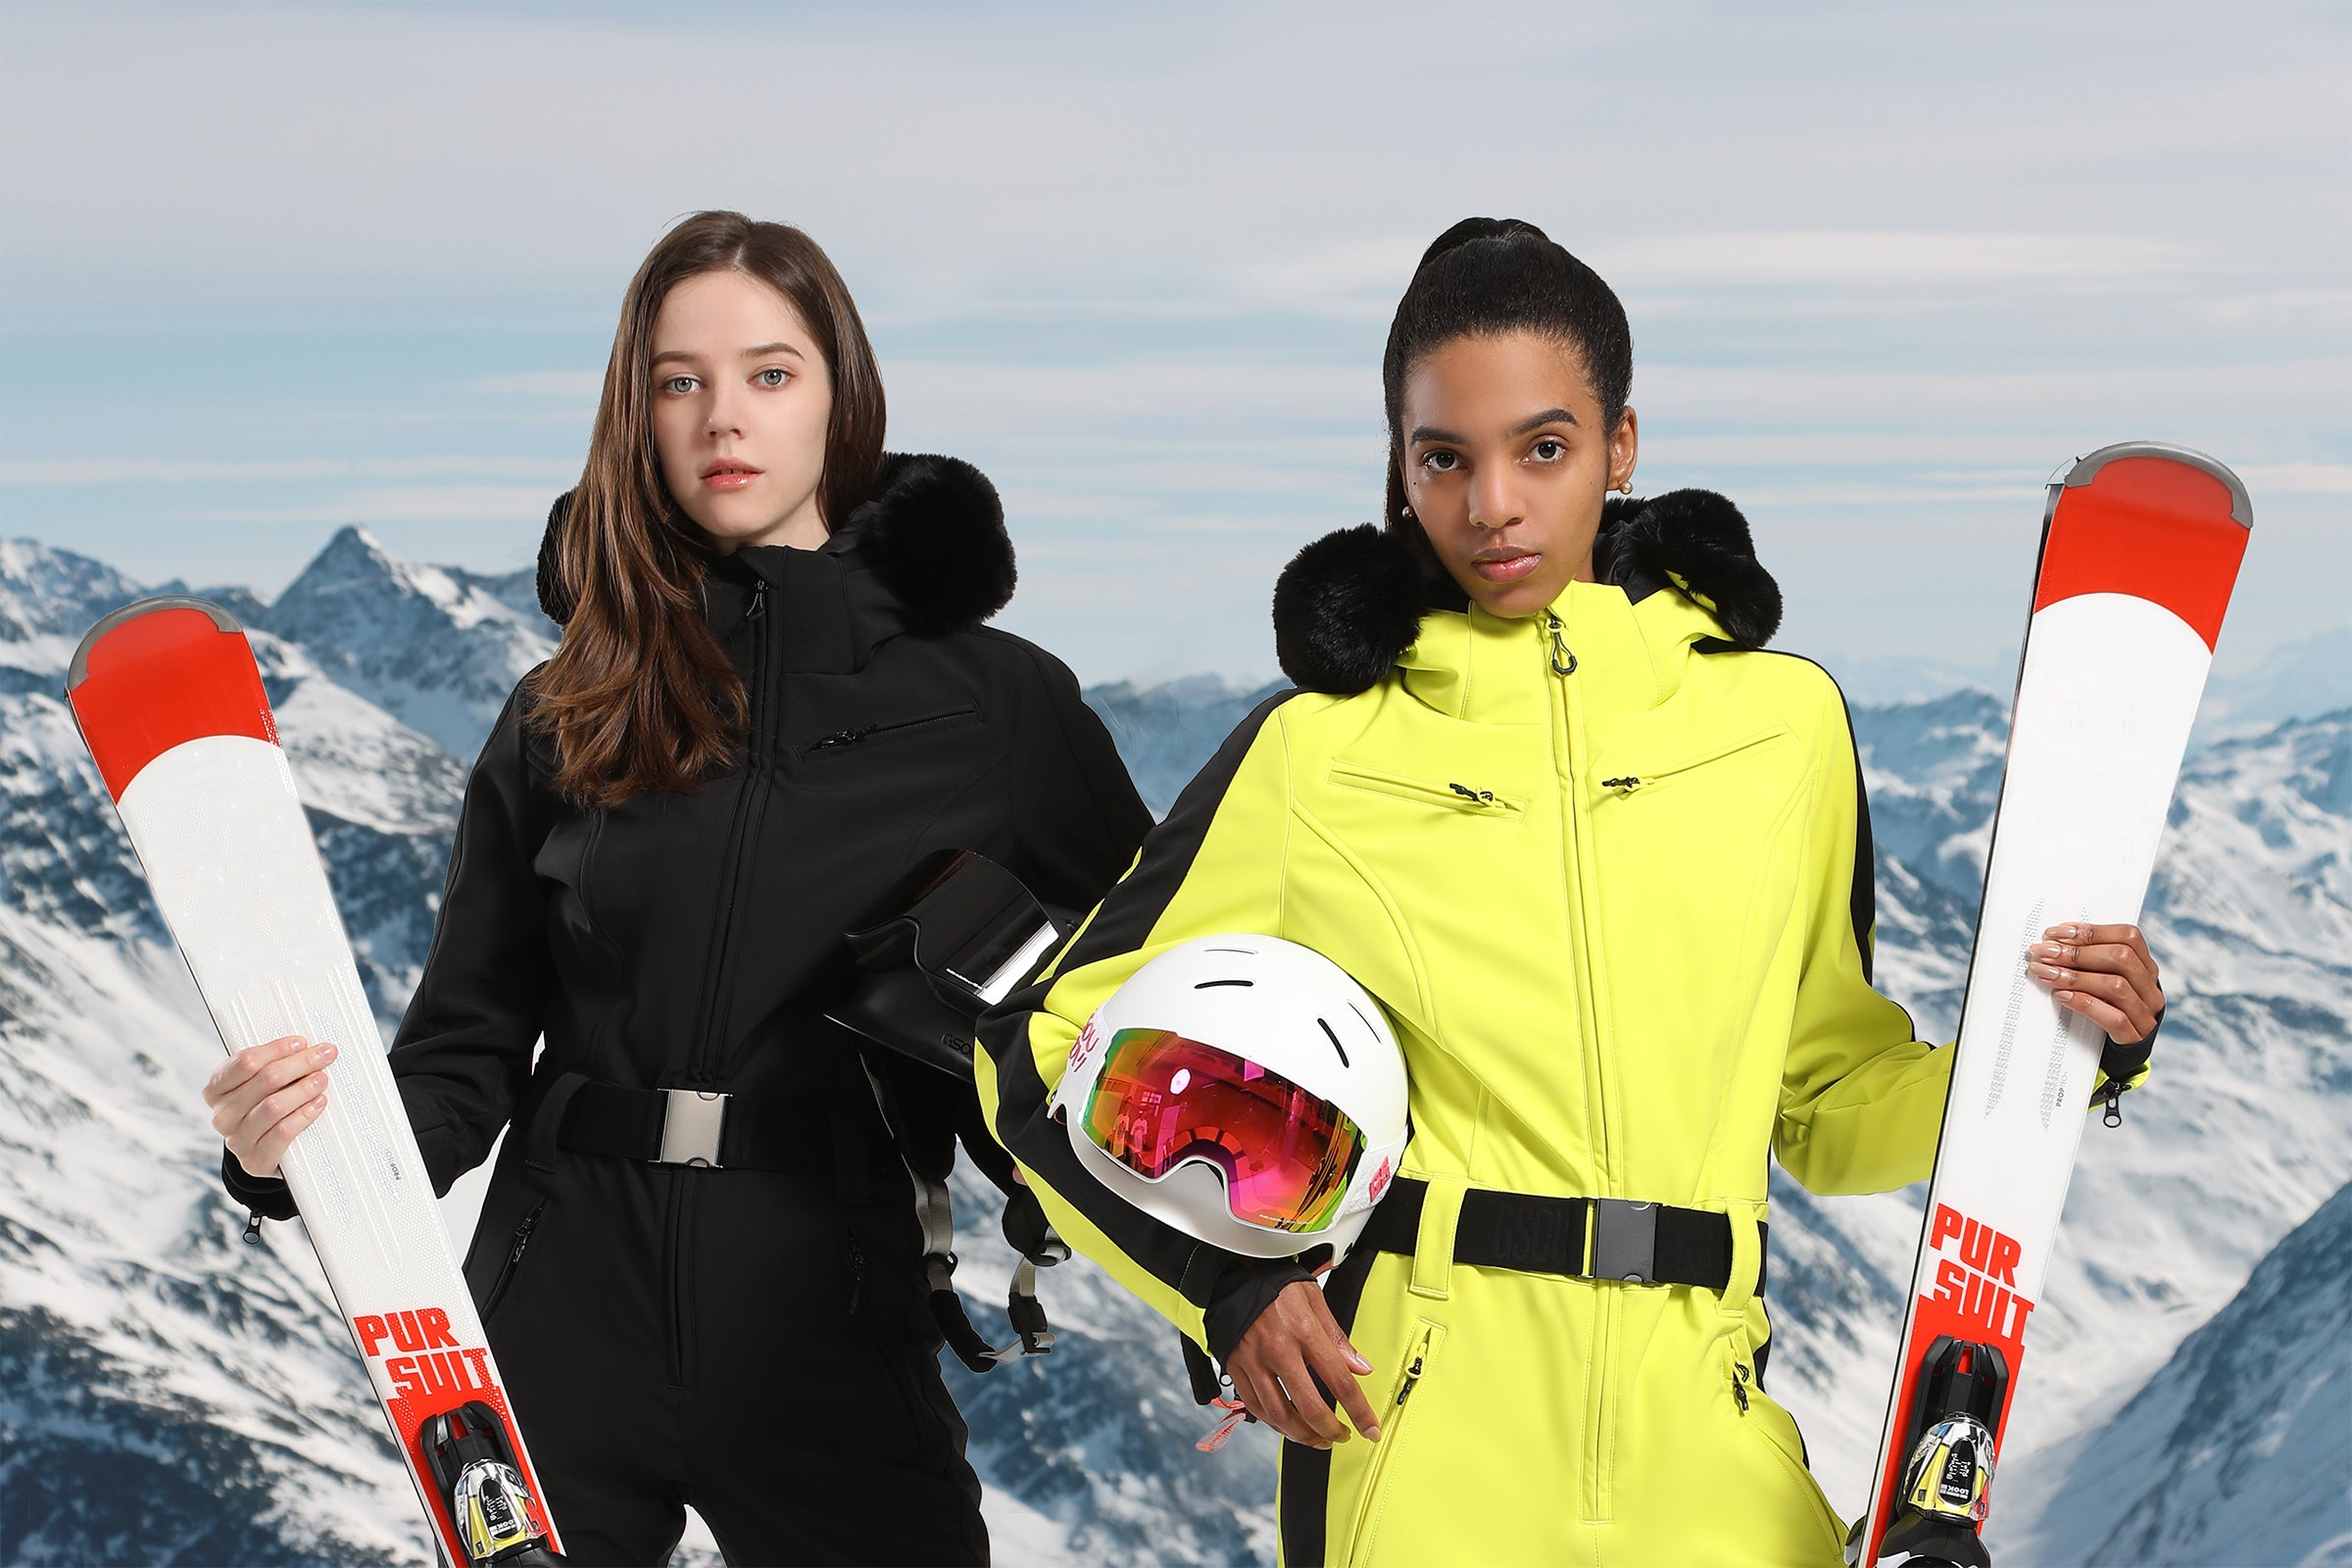 Gsou Snow - Outdoor Gear, Ski Clothing, Snowboard Jackets & Pants